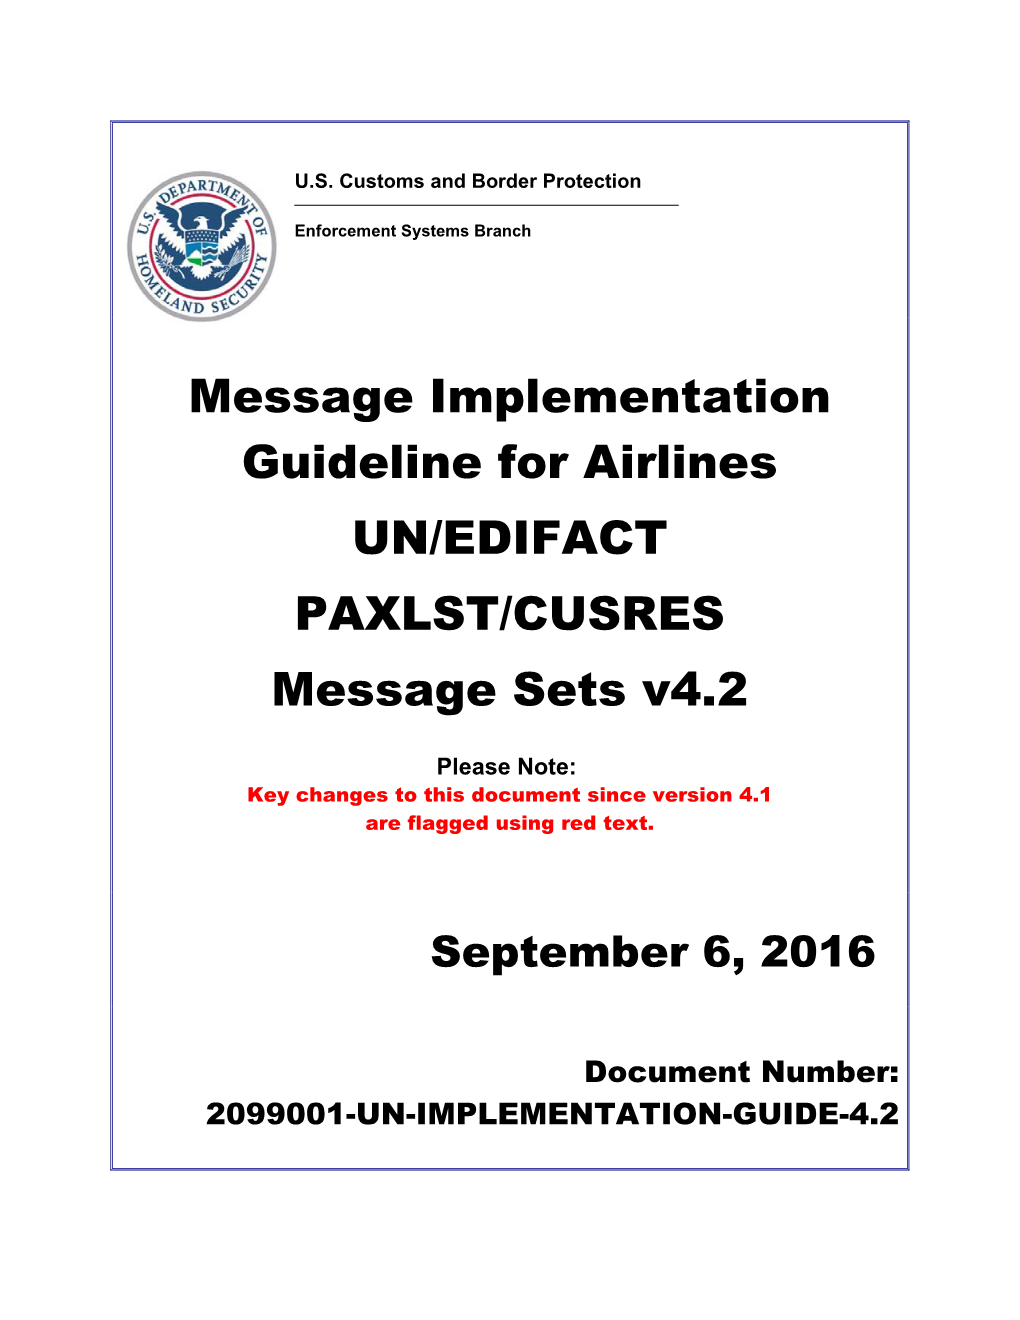 Message Implementation Guideline for Airlines UN/EDIFACT PAXLST/CUSRES Message Sets V4.2